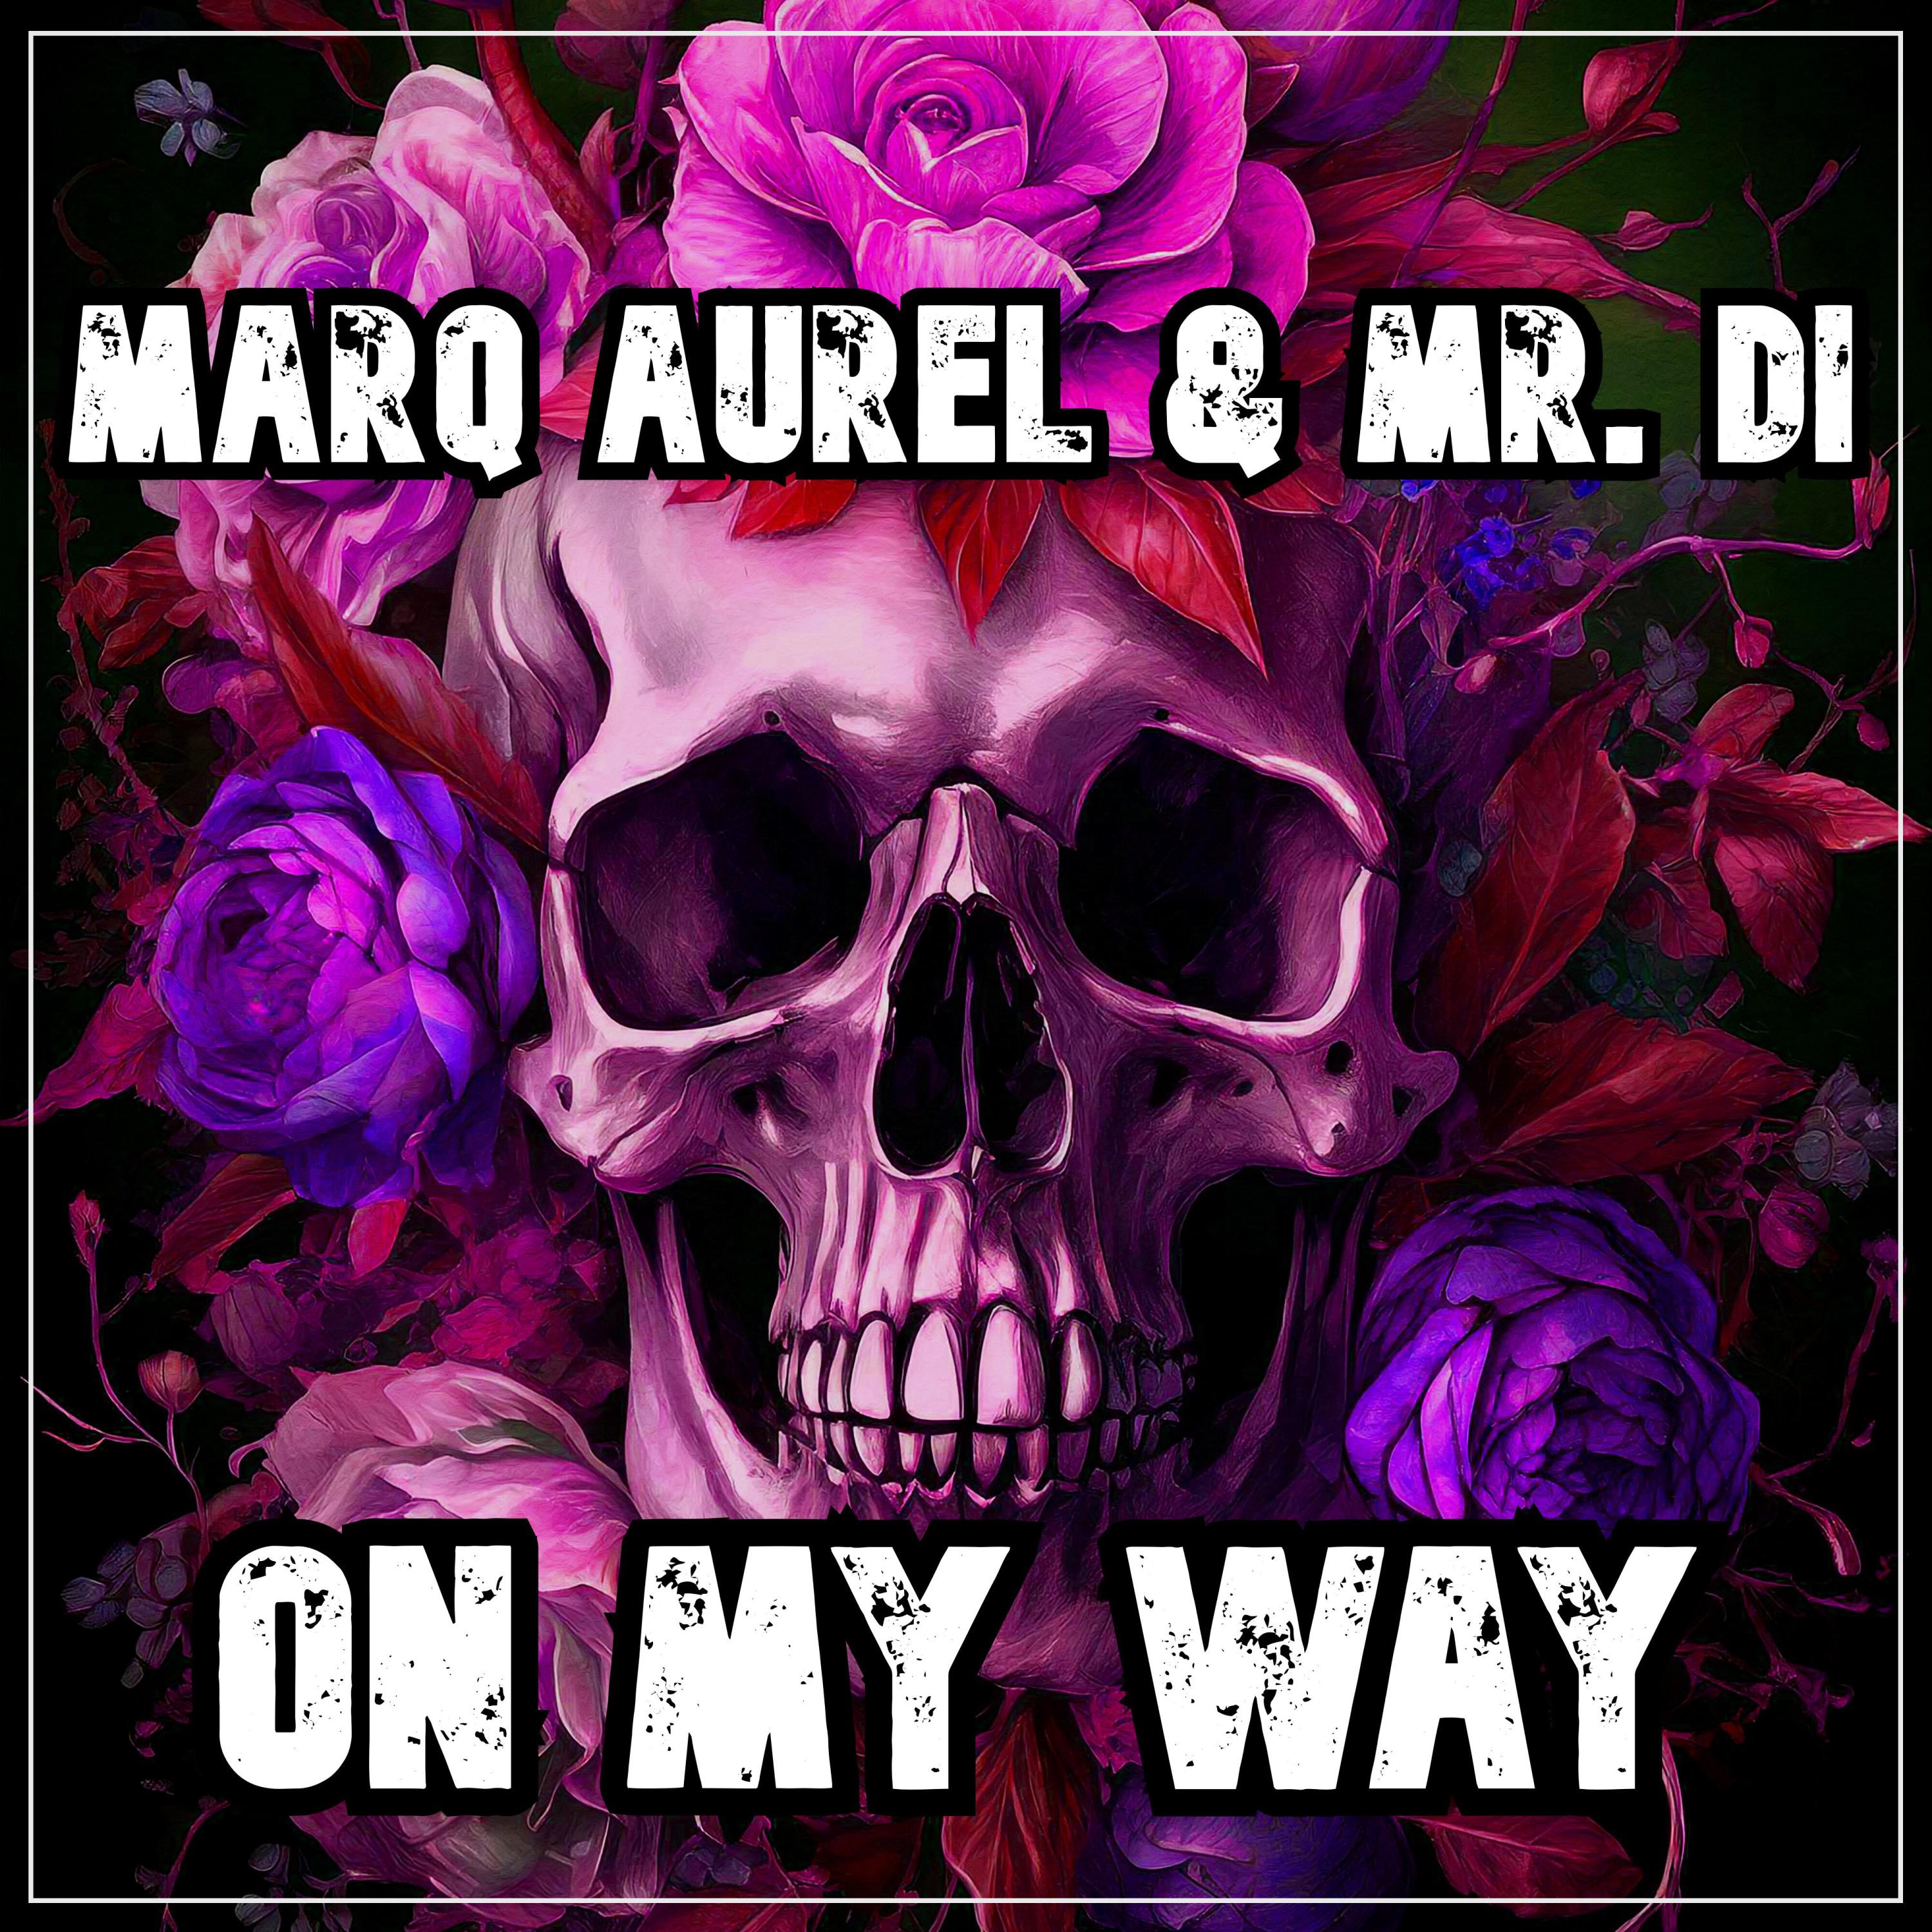 Marq Aurel - Watch Me Now (Bounce Mix)